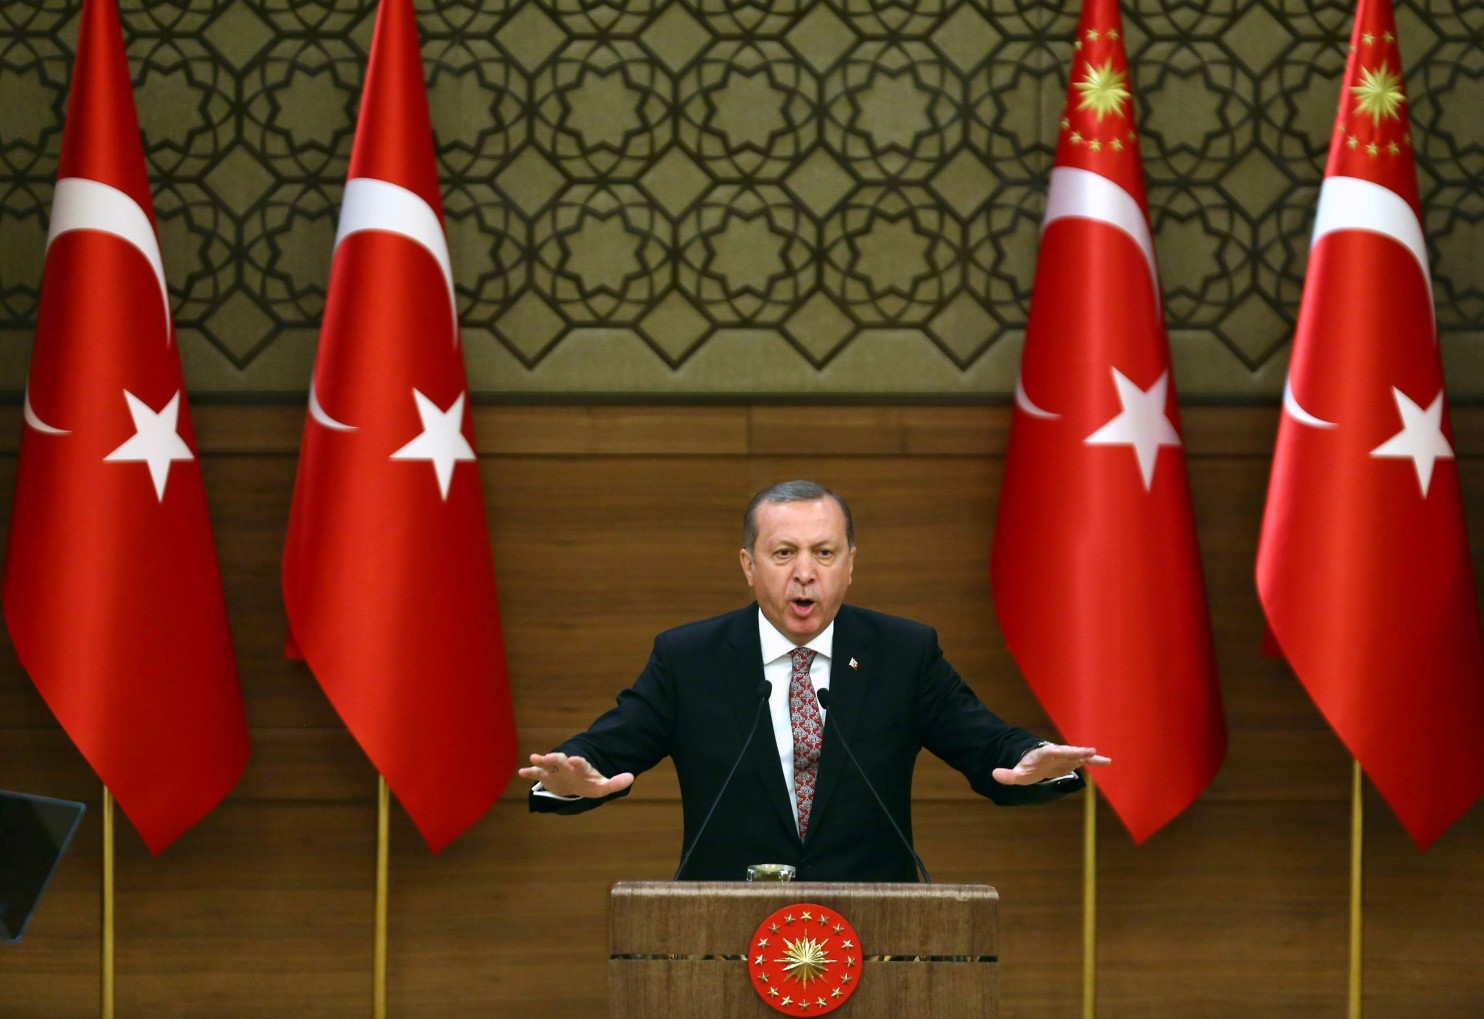 Fethullah Gulen: The Turkey I no longer know